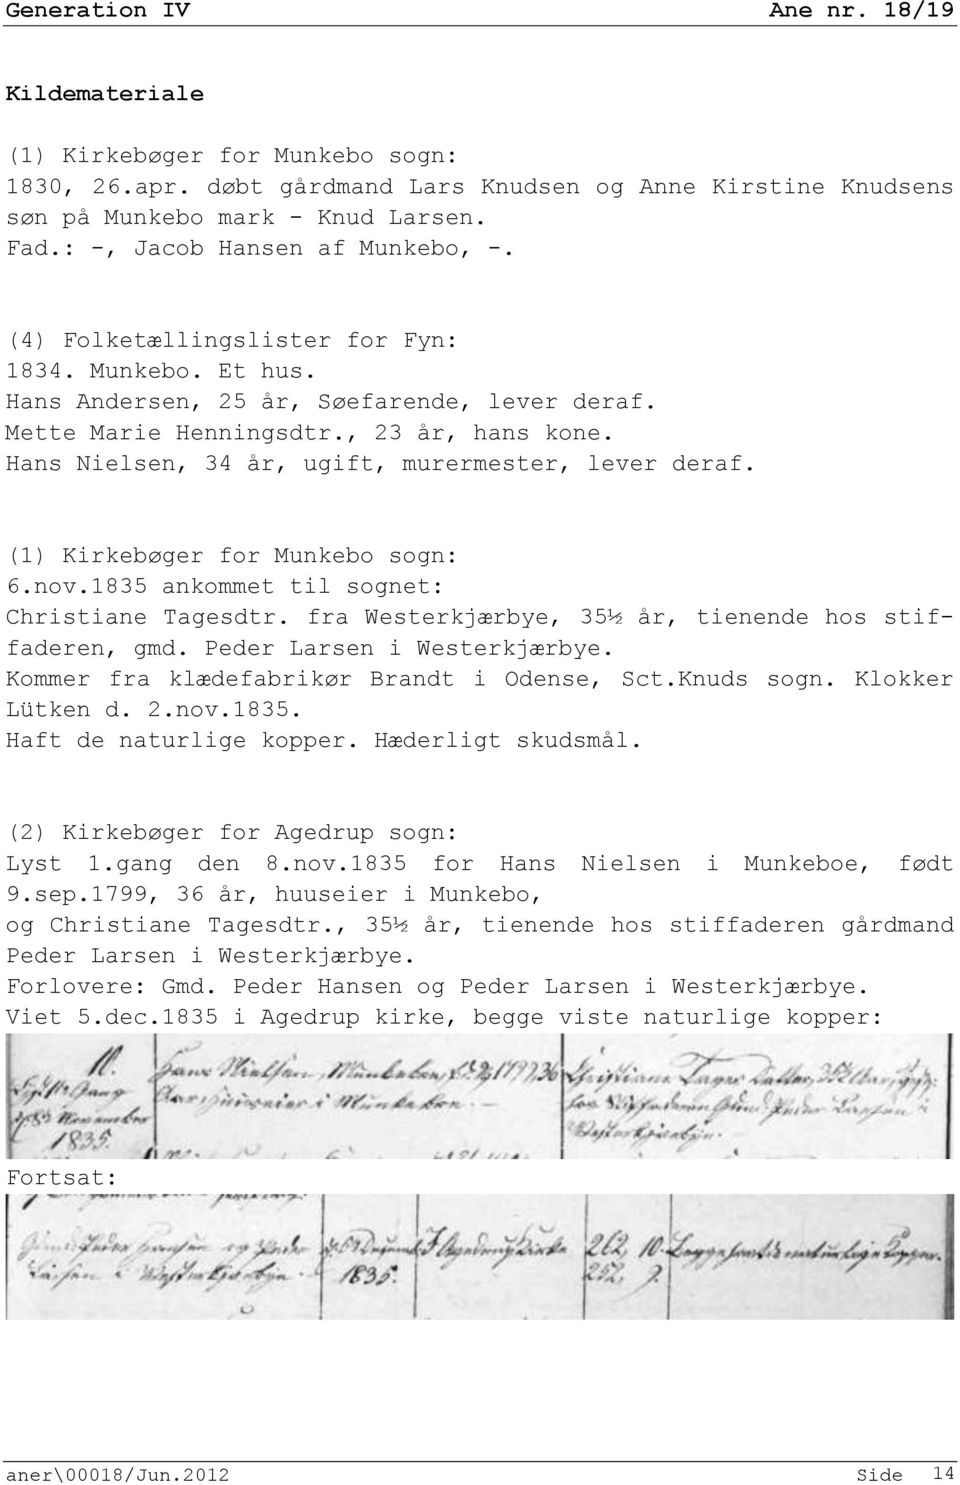 (1) Kirkebøger for Munkebo sogn: 6.nov.1835 ankommet til sognet: Christiane Tagesdtr. fra Westerkjærbye, 35½ år, tienende hos stiffaderen, gmd. Peder Larsen i Westerkjærbye.